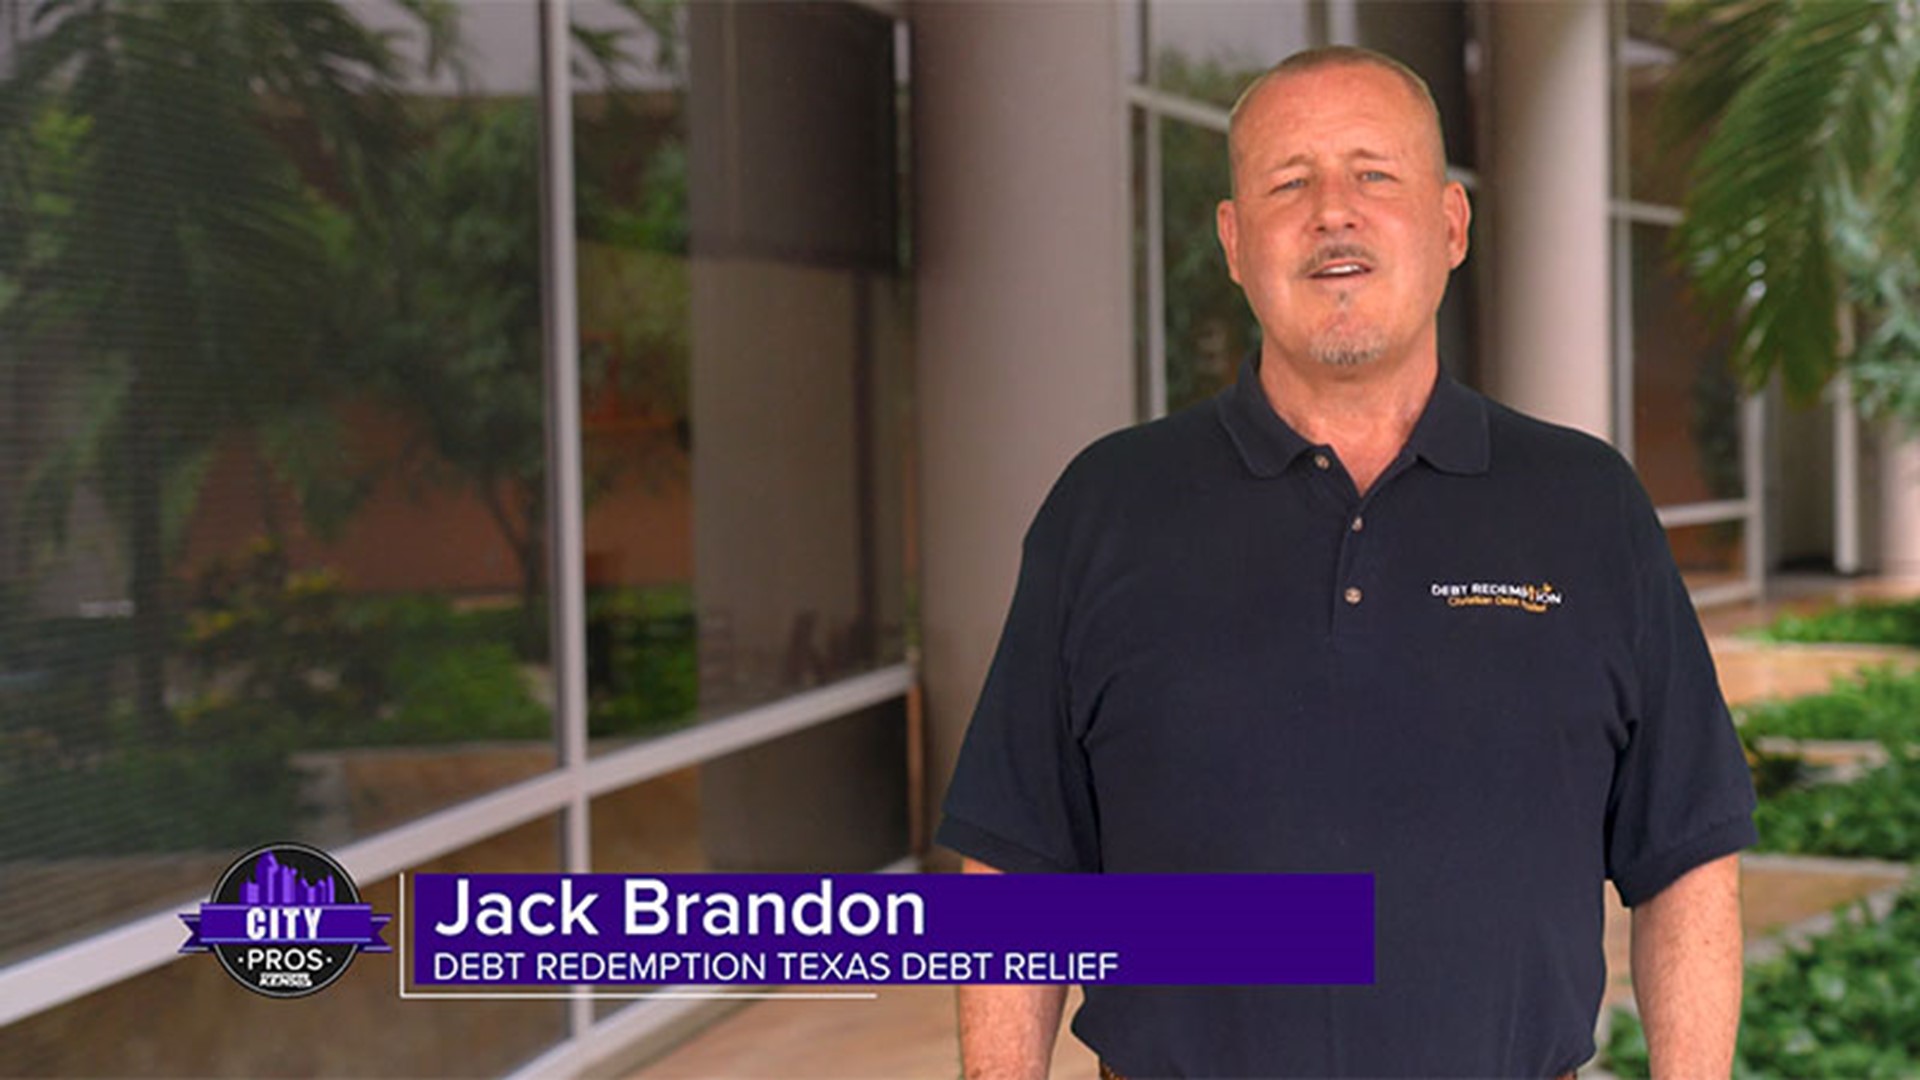 Debt Redemption Texas Debt Relief has programs to help people resolve their debt obligations.